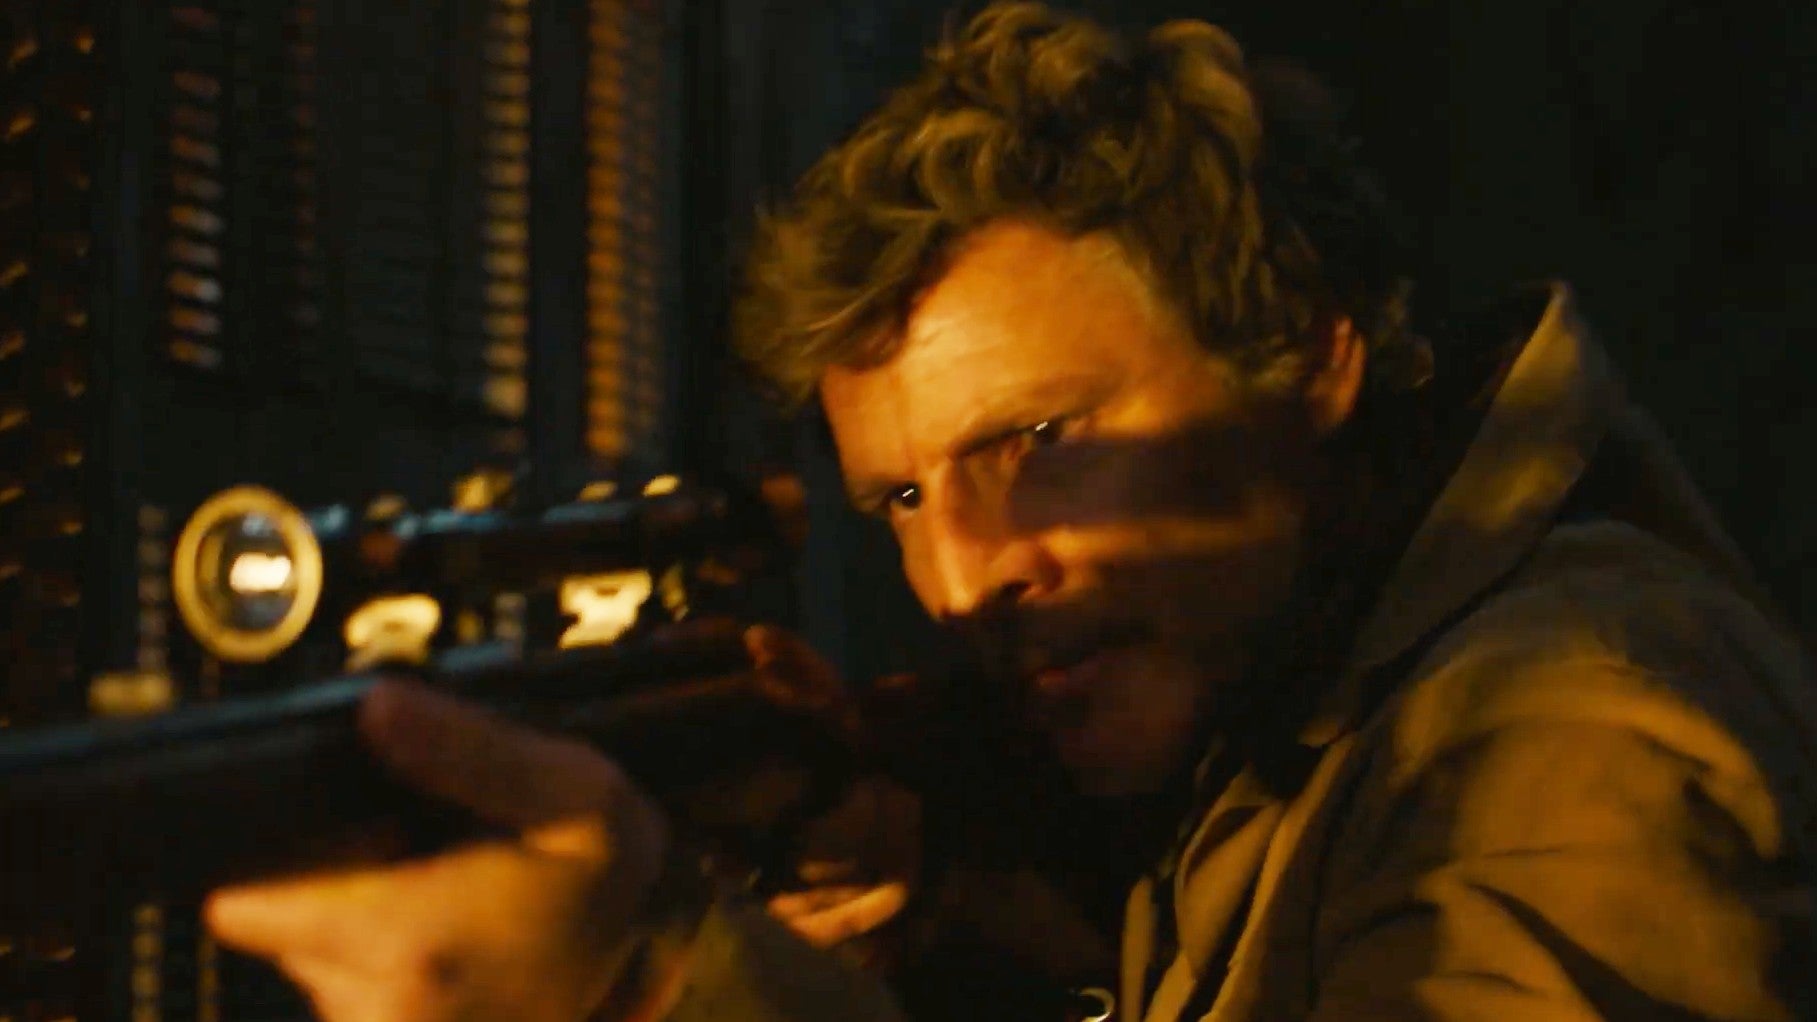 Image for Let's break down HBO's The Last of Us trailer